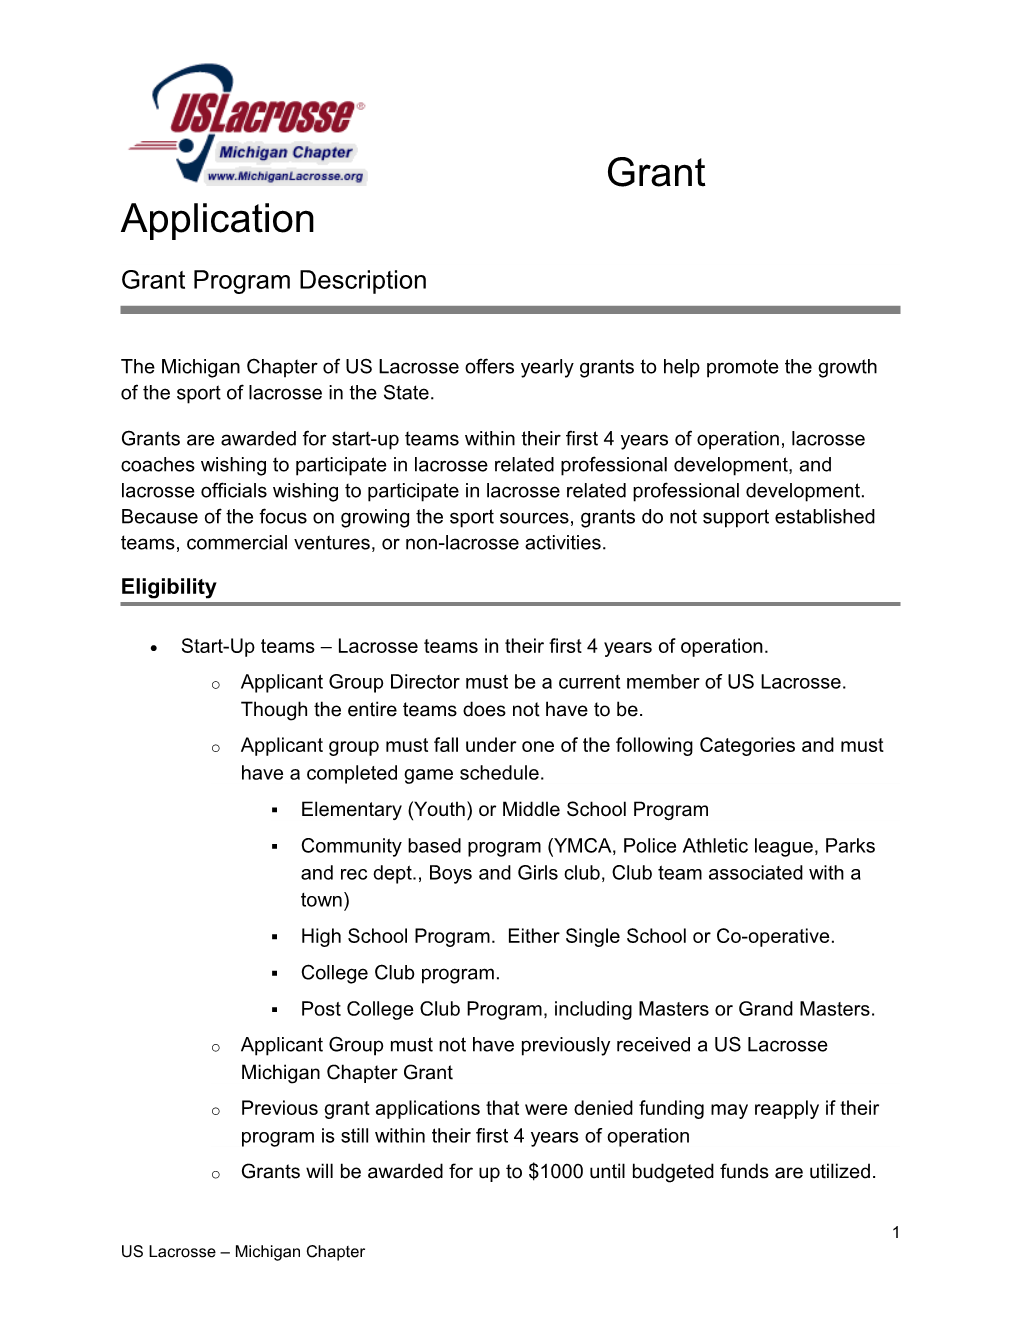 Grant Program Description